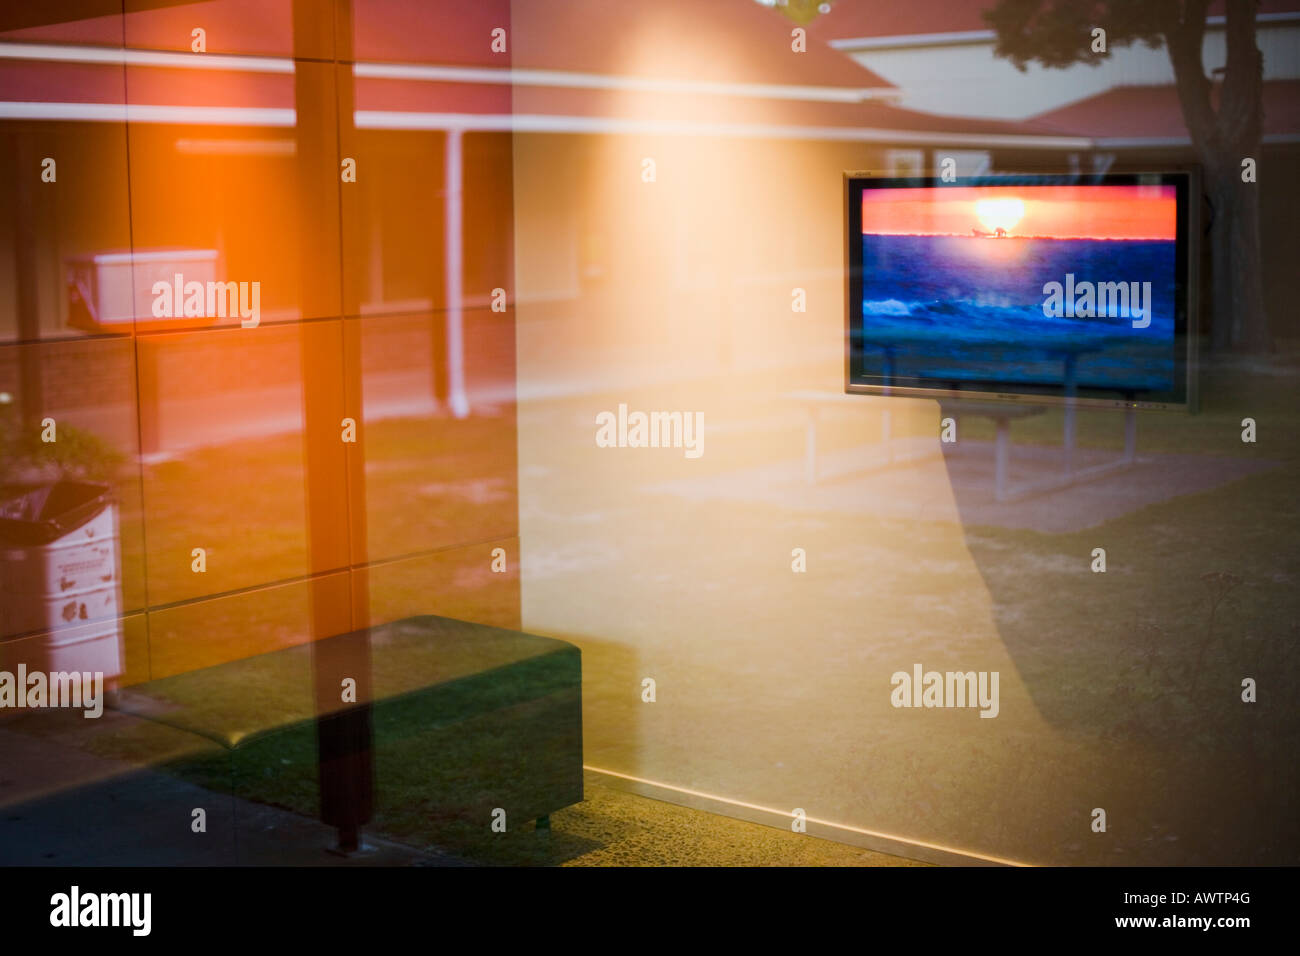 TV in shop window Stock Photo